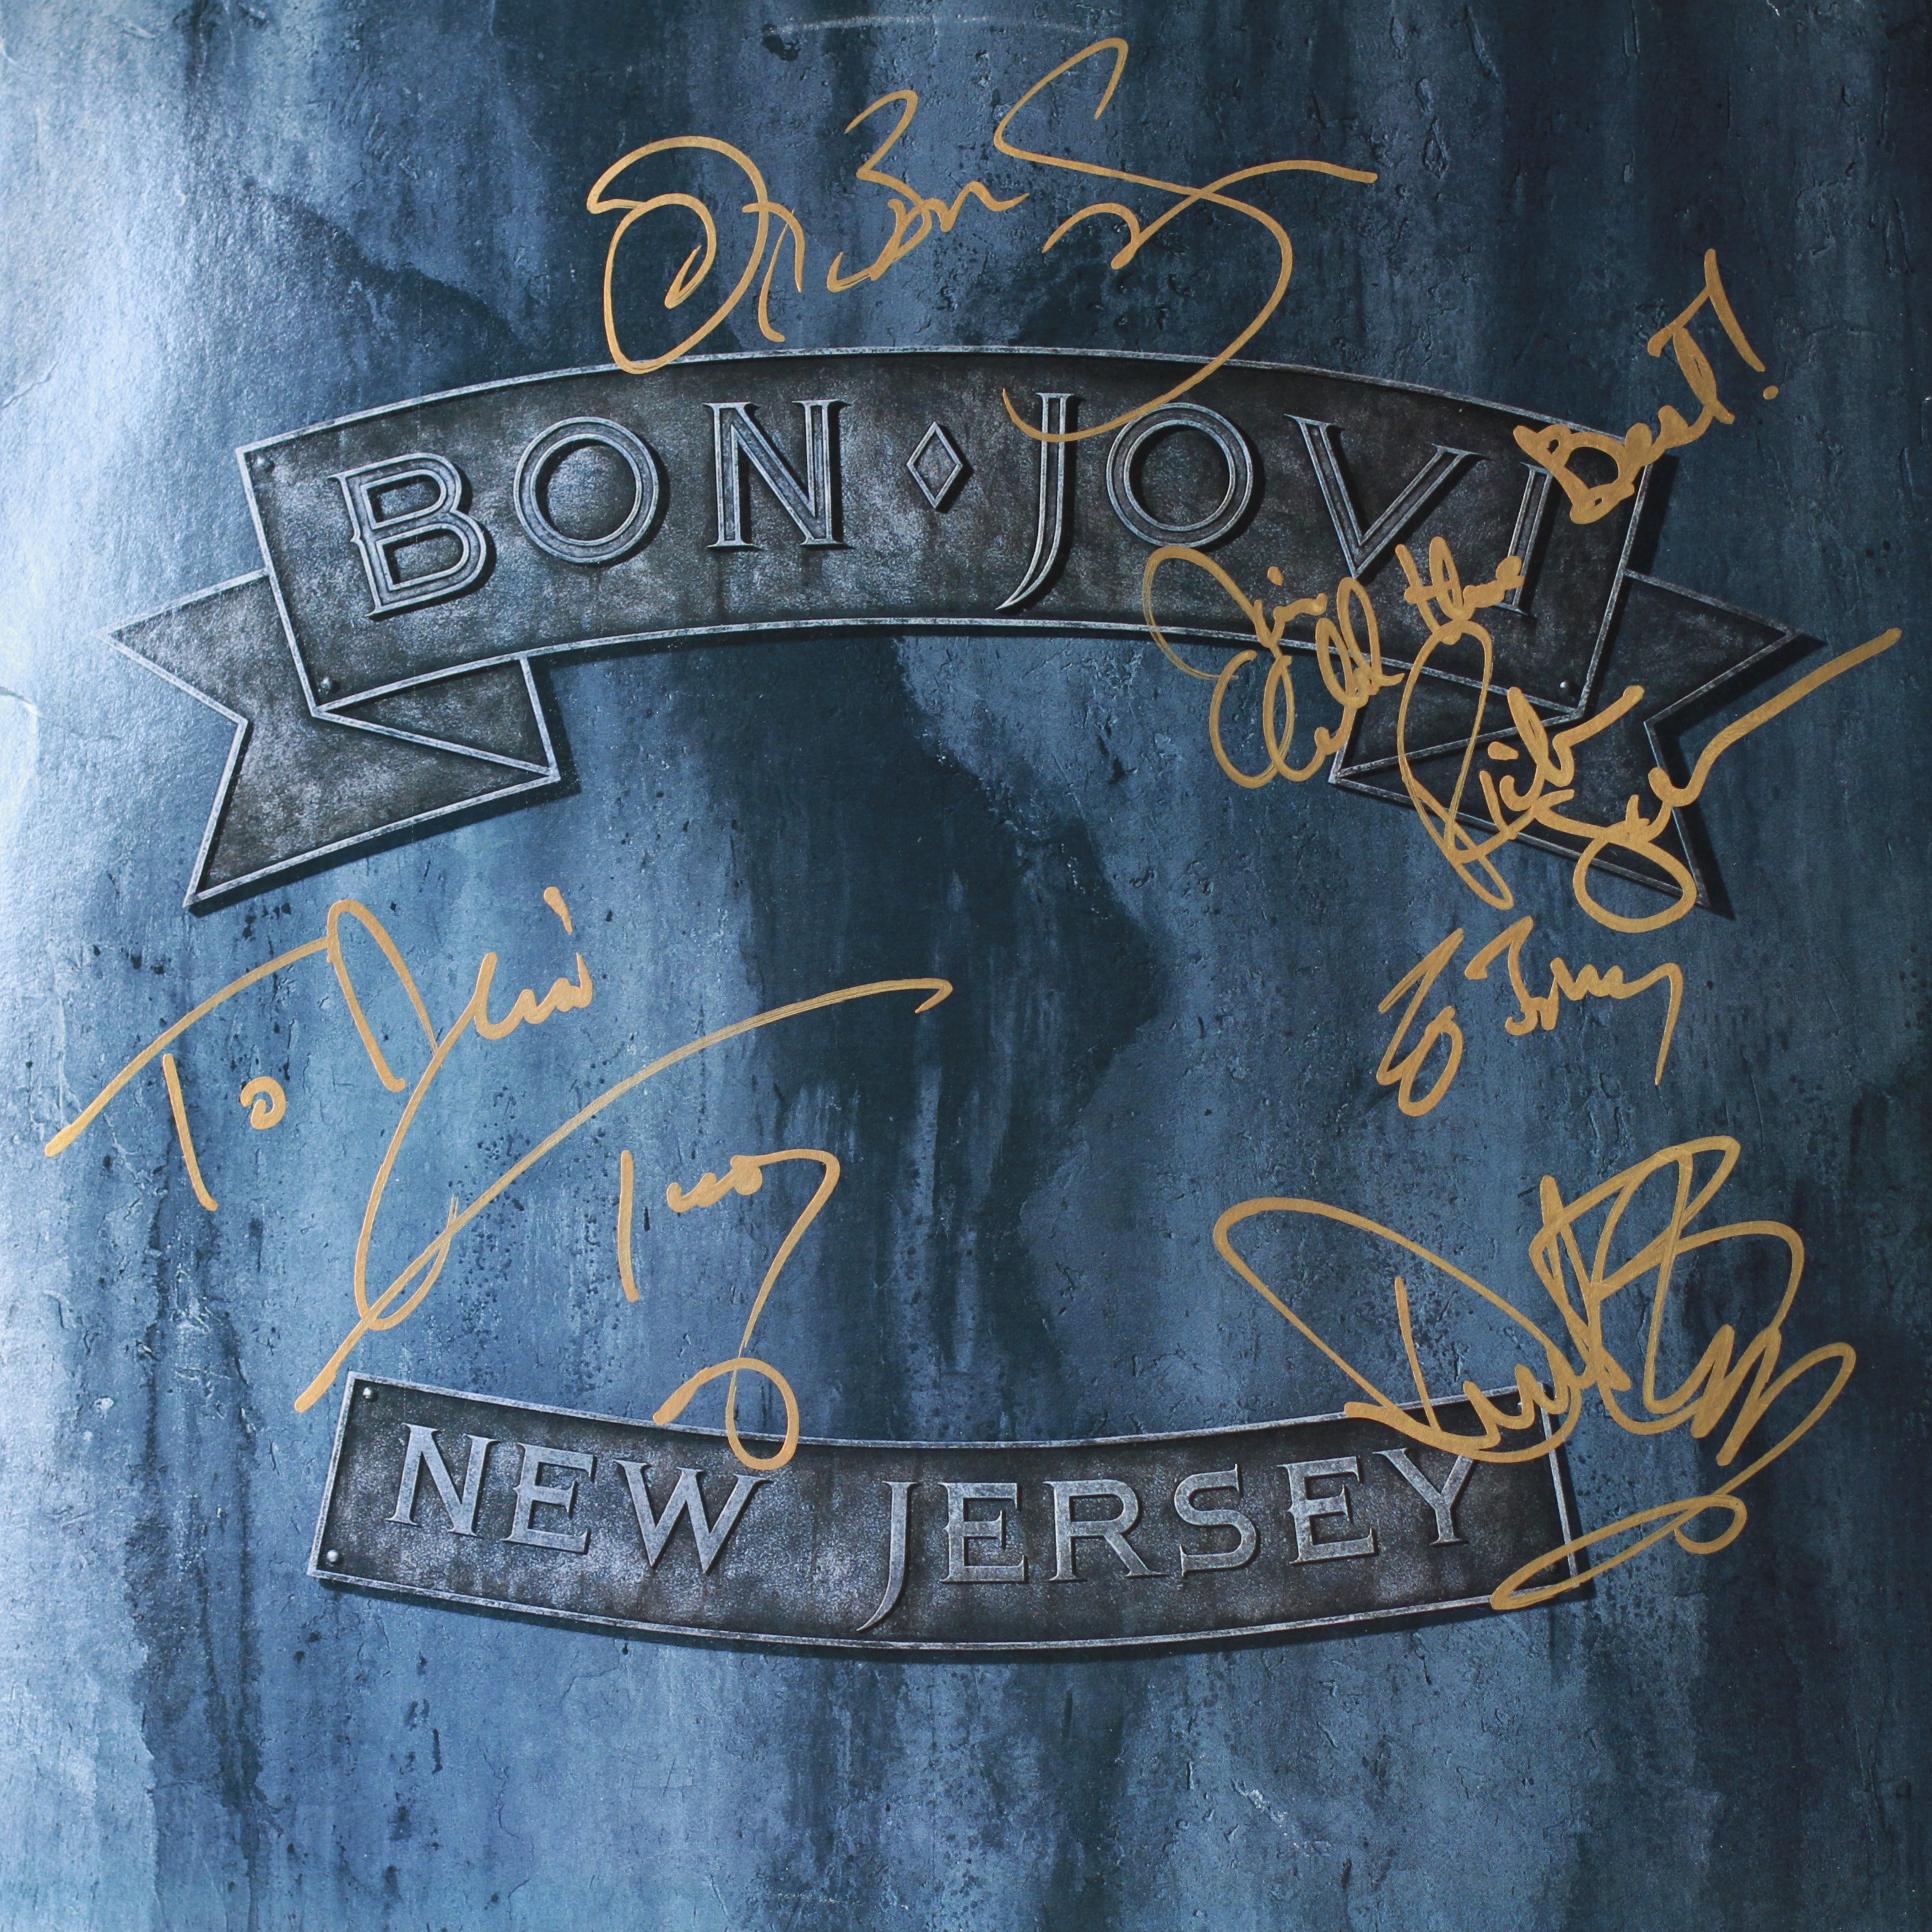 New Jersey album - Wikipedia